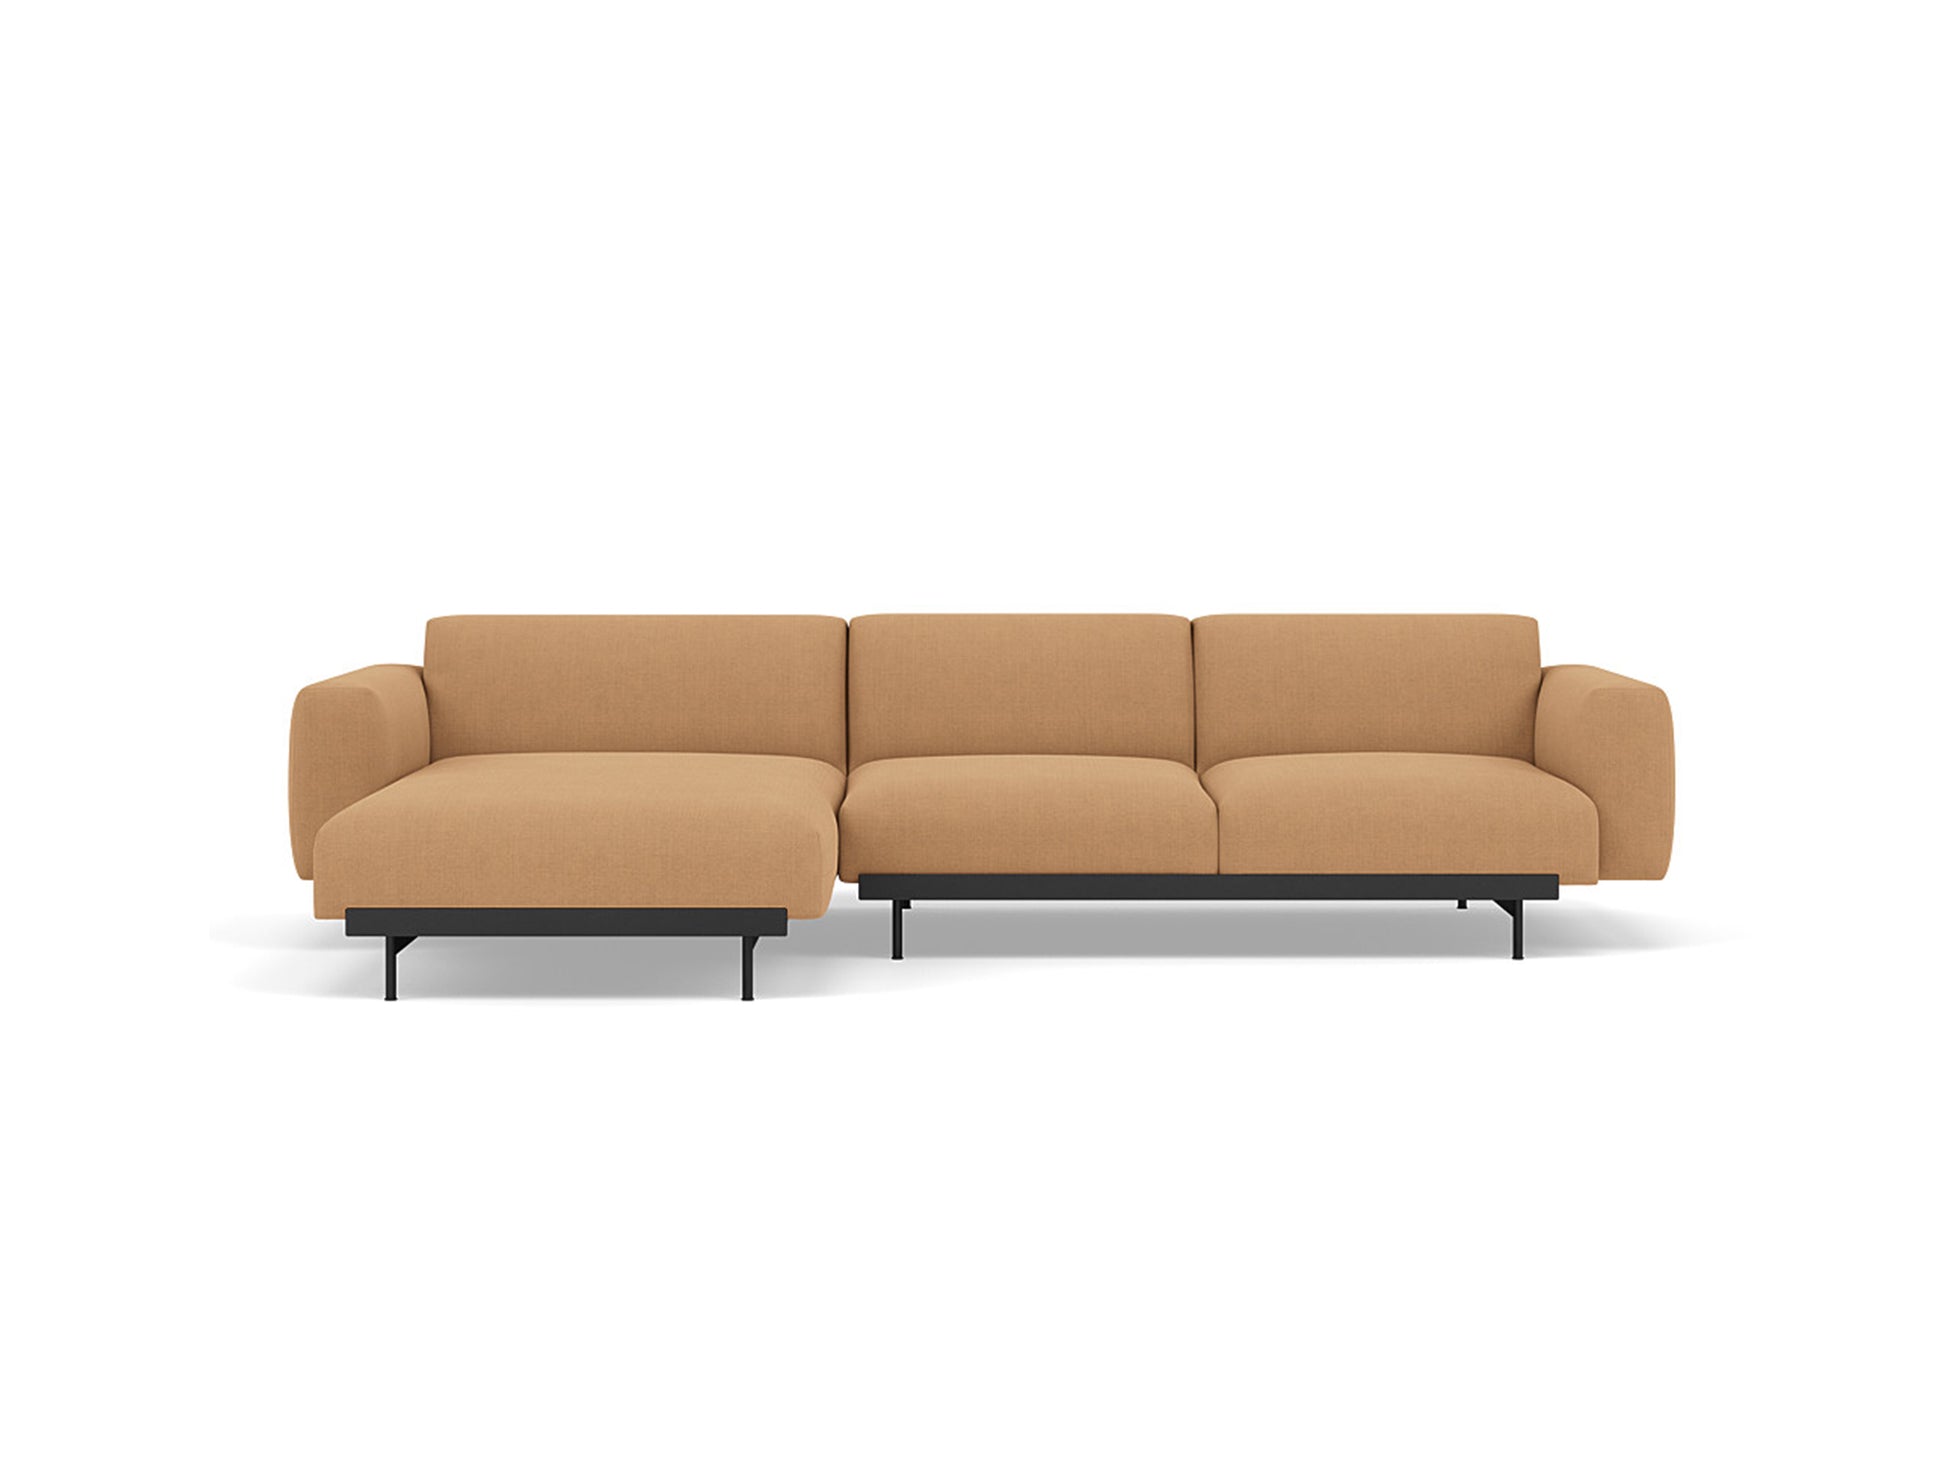 In Situ 3-Seater Modular Sofa by Muuto - Configuration 7 / Fiord  451